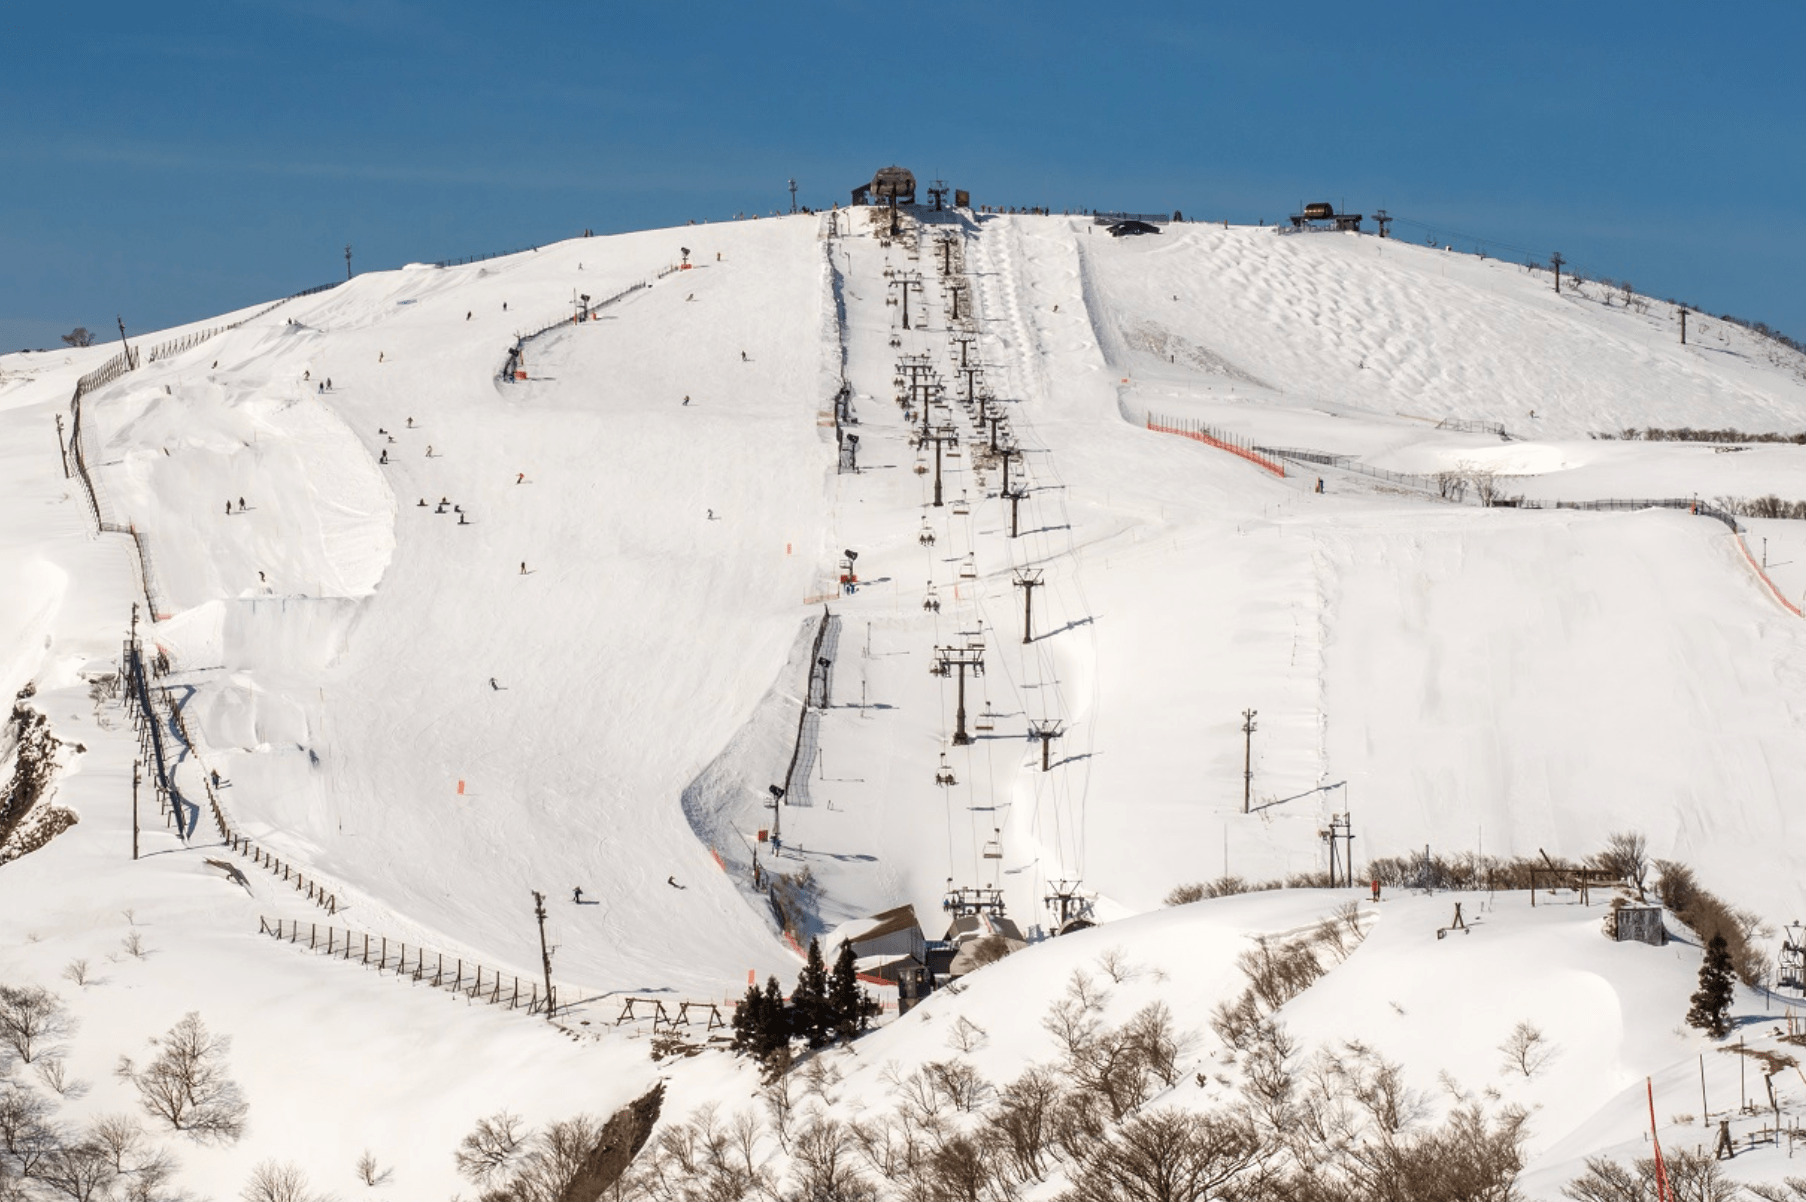 Ski slopes at Biwako Valley Ski Resort